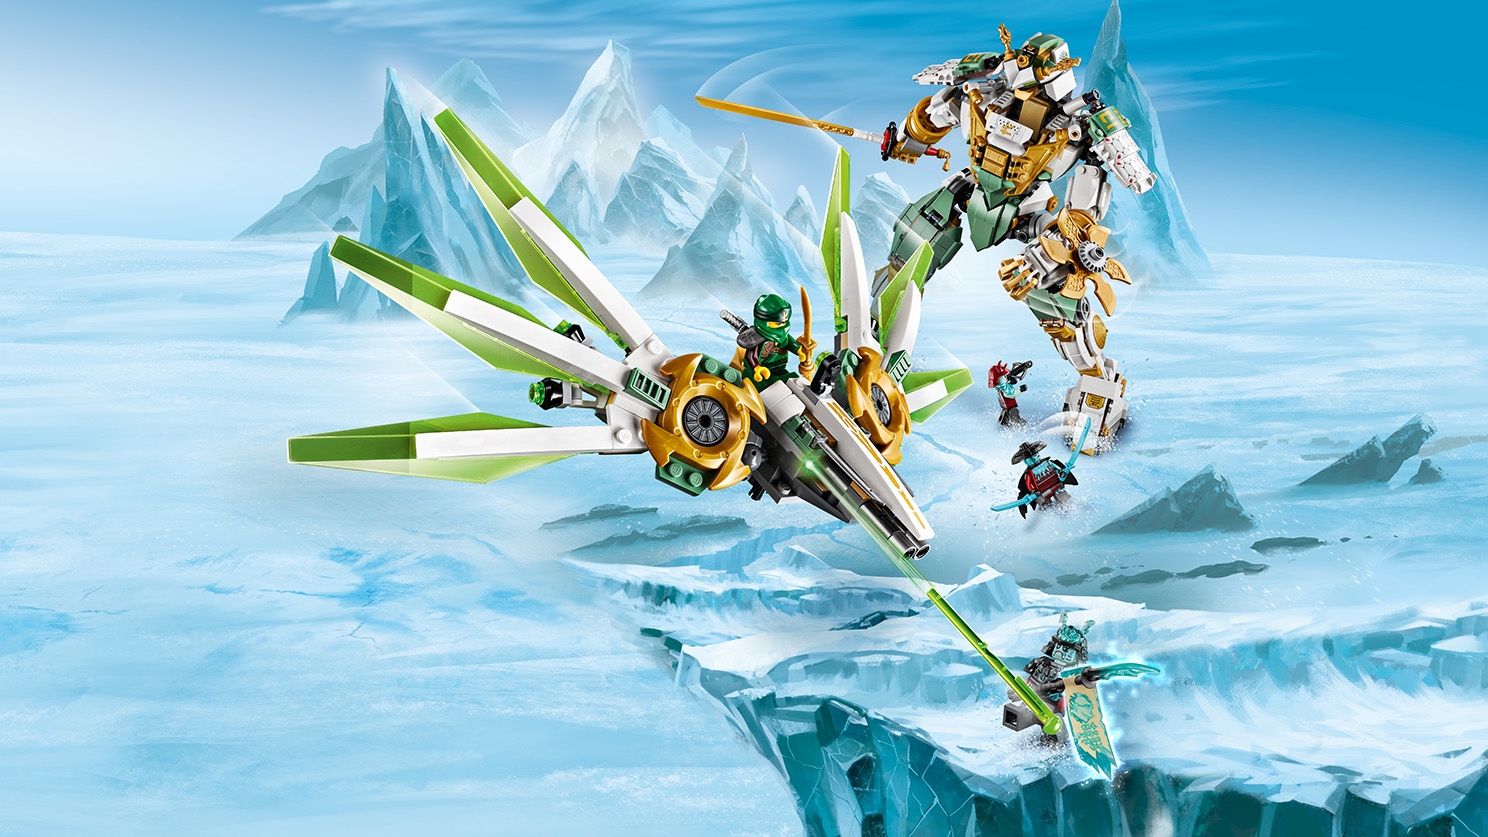 LEGO NINJAGO: Lloyd's Titan Mech